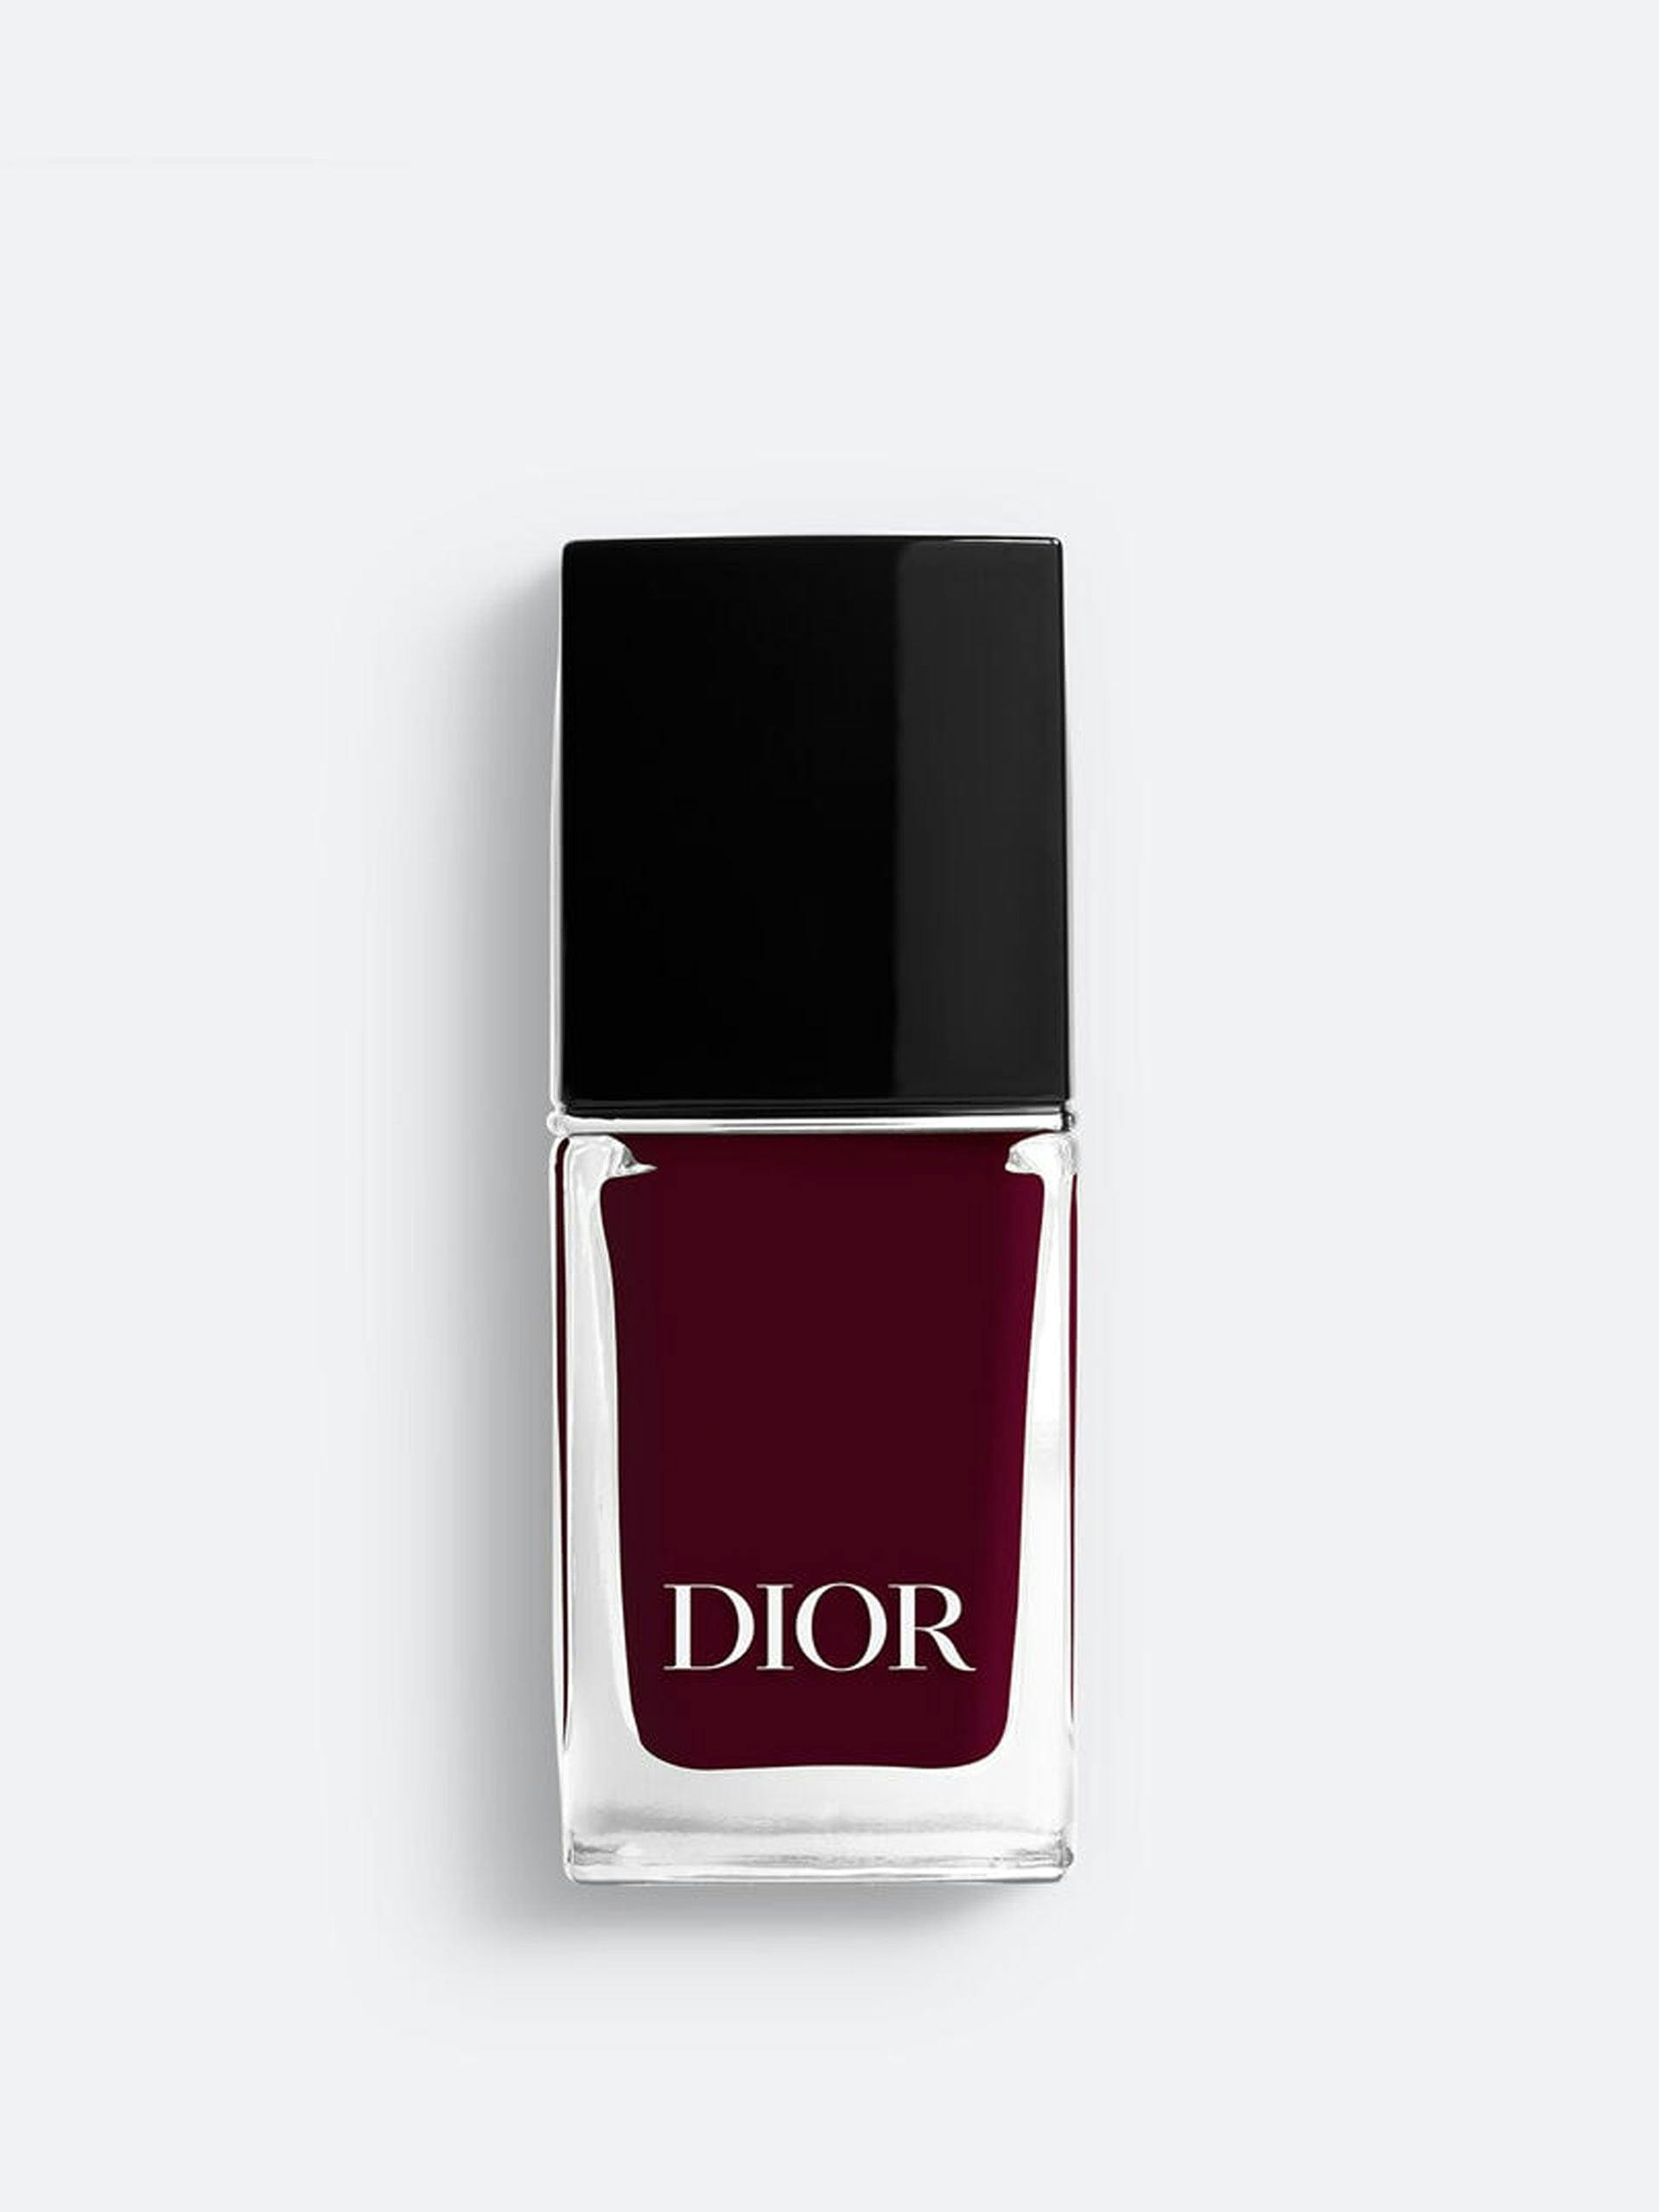 Dior vernis nail polish